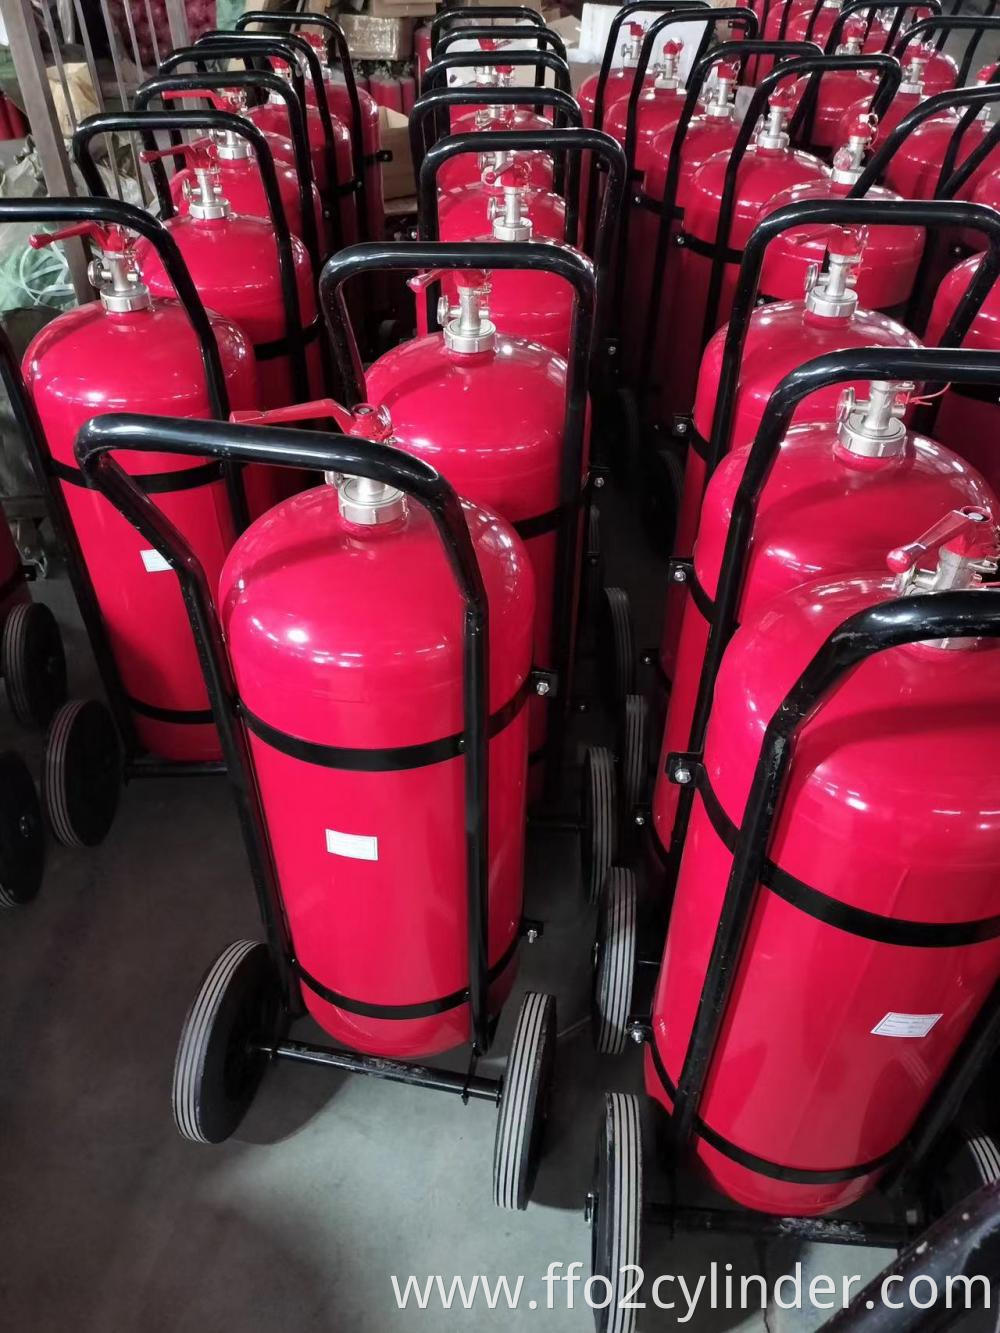 100Kg Powder Trolley Fire Extinguisher